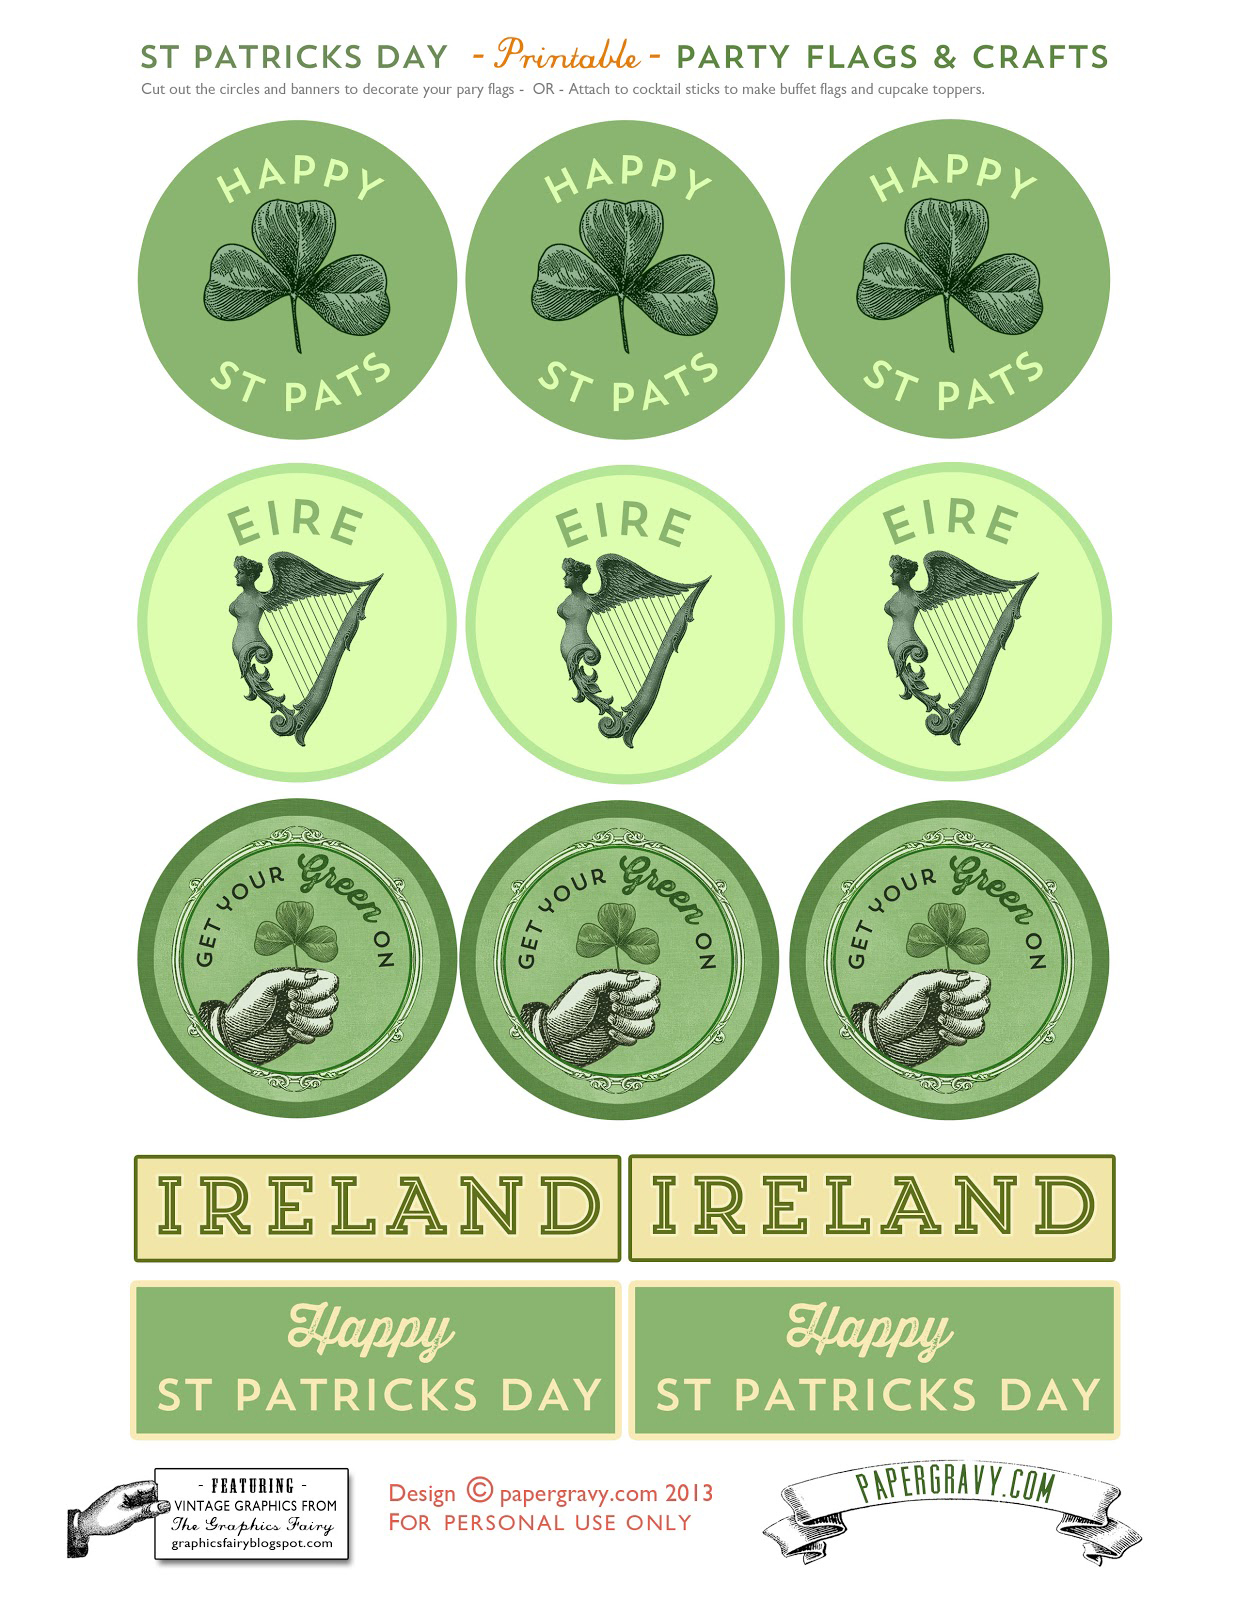 Happy St Patrick's Day Cartoon Leprechaun Irish Ireland Banner 3'x2' Flag 